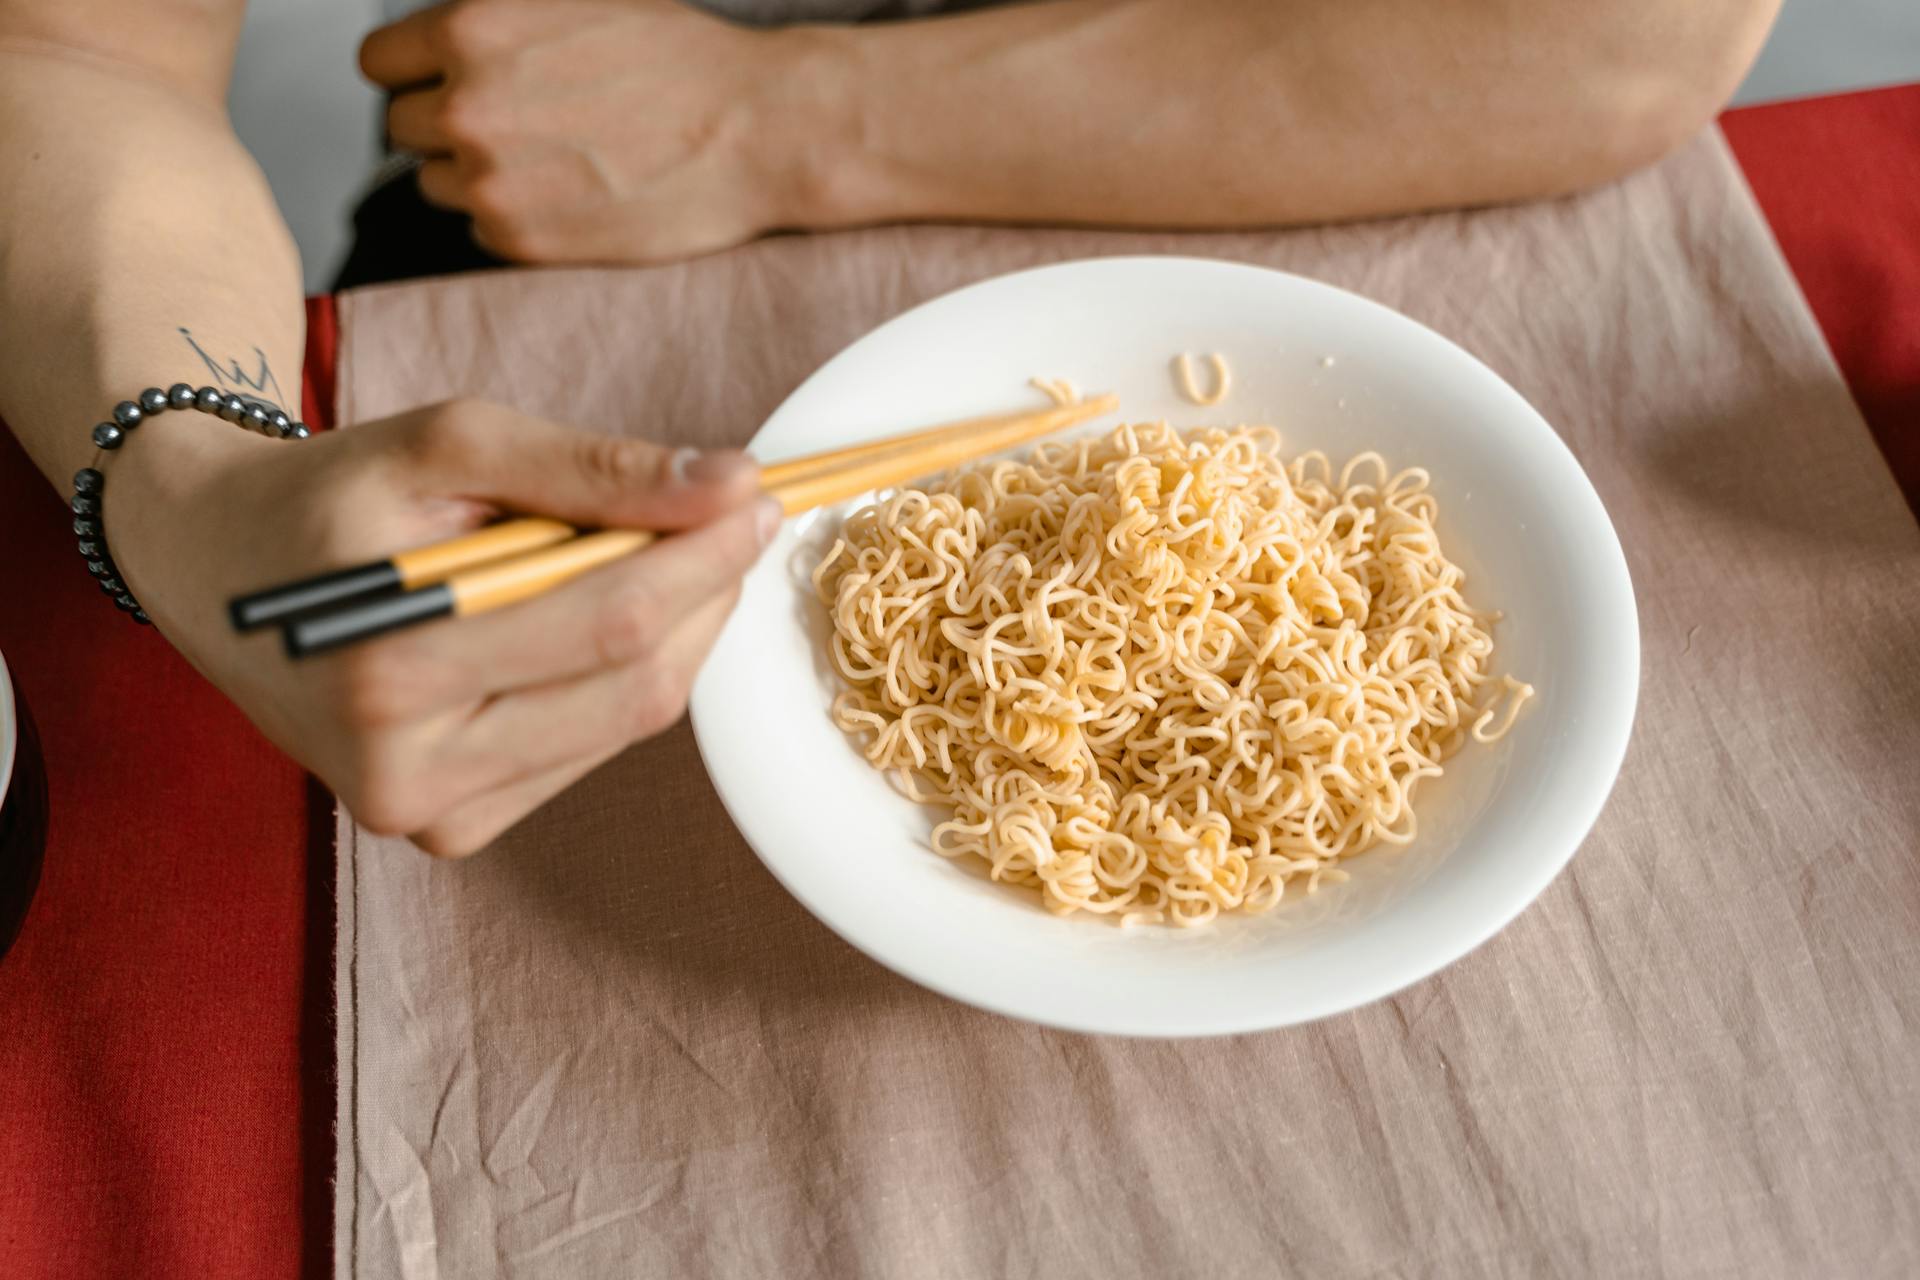 Noodles on a plate | Source: Pexels